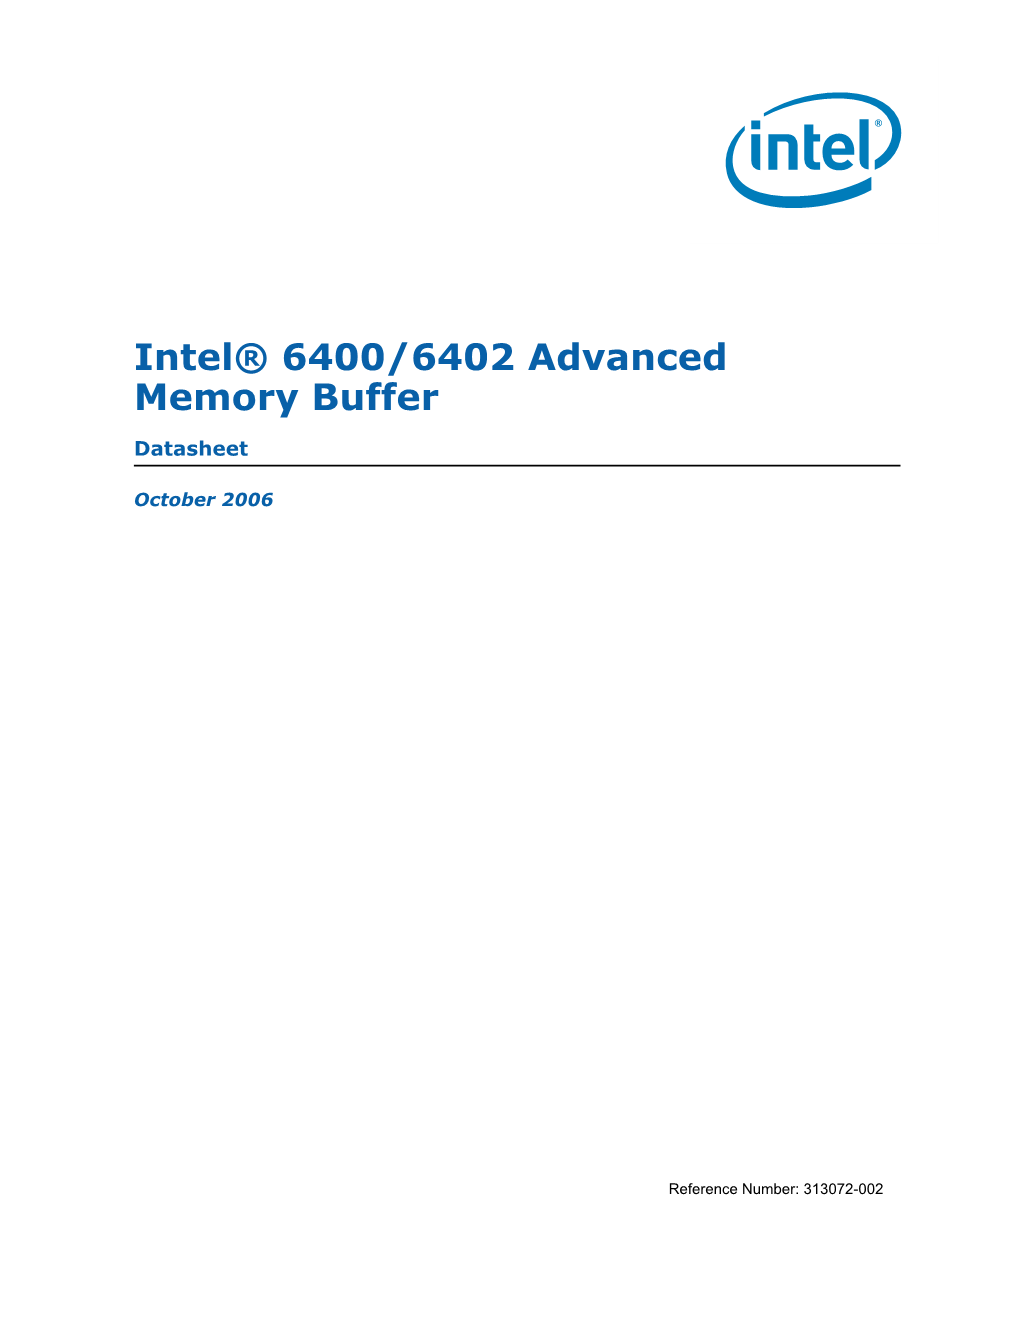 Intel® 6400/6402 Advanced Memory Buffer